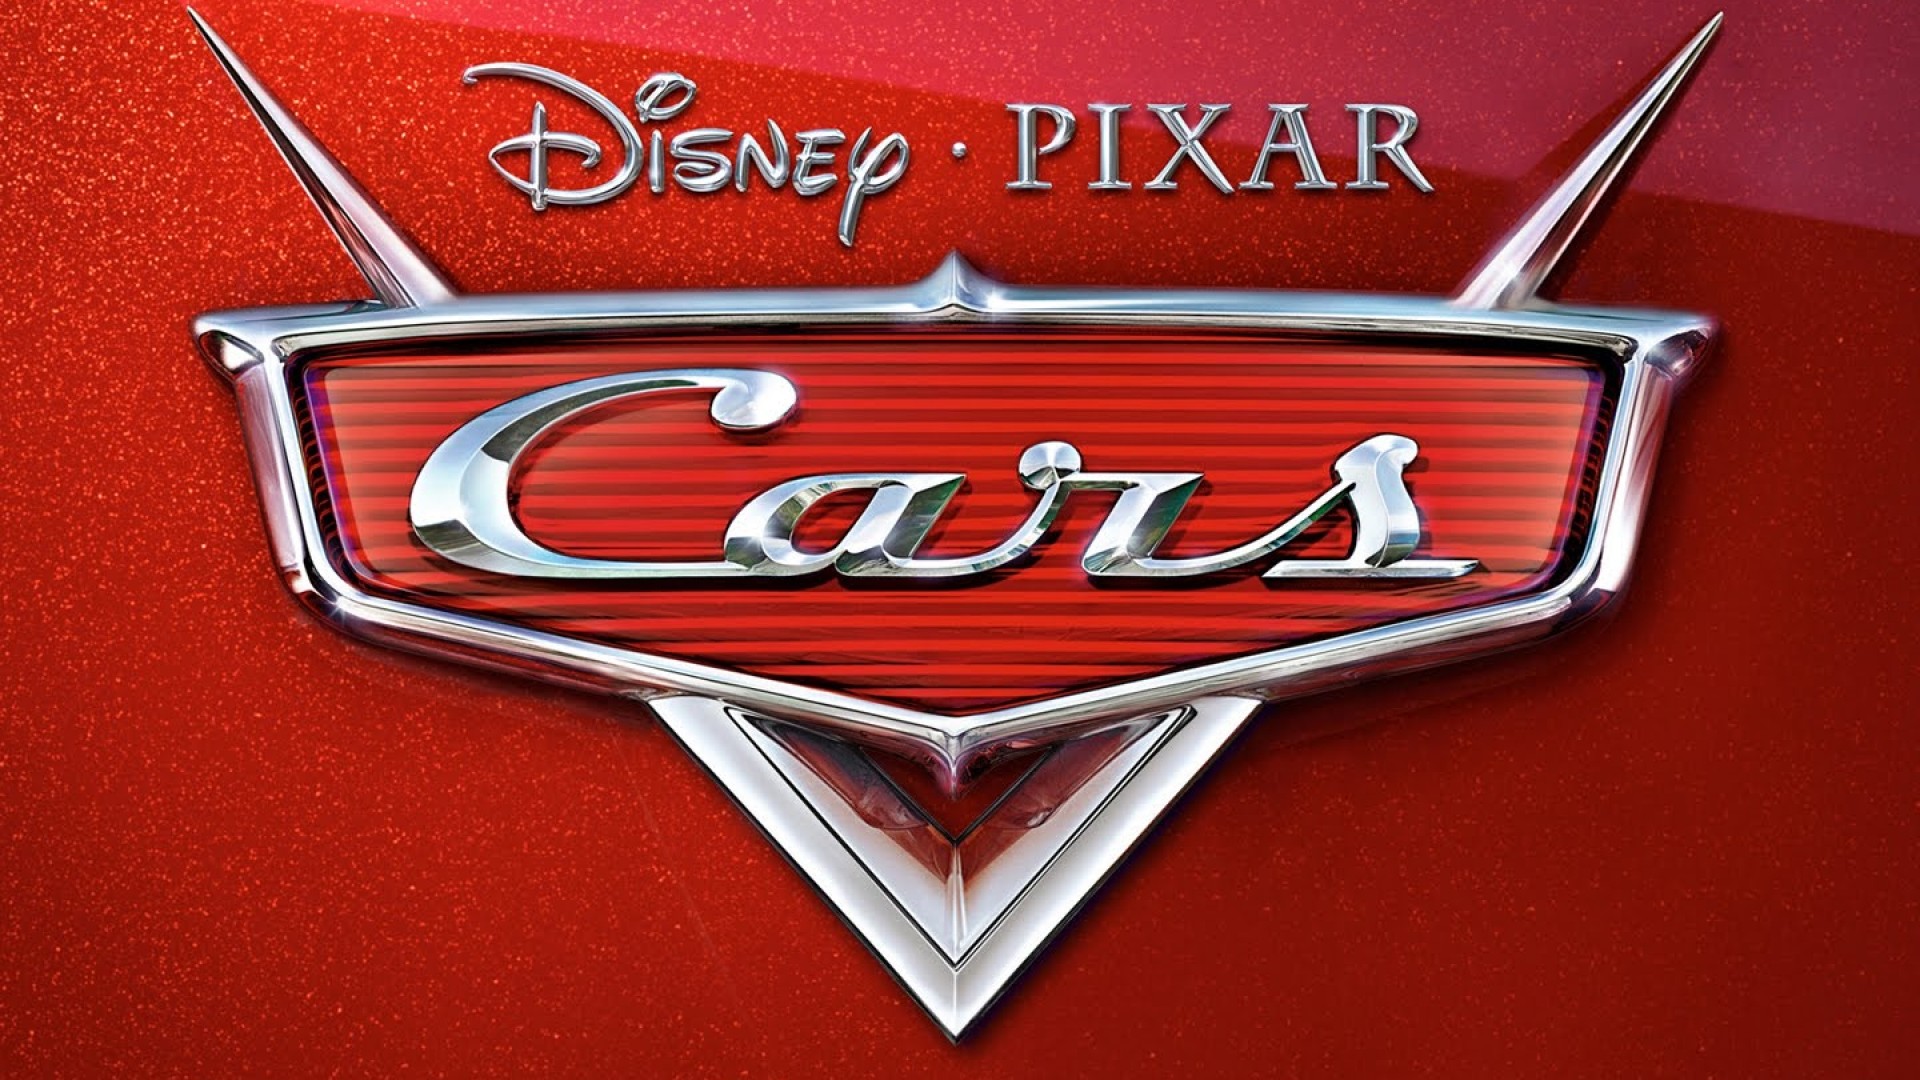 1920x1080 Disney Pixar Cars Wallpaper